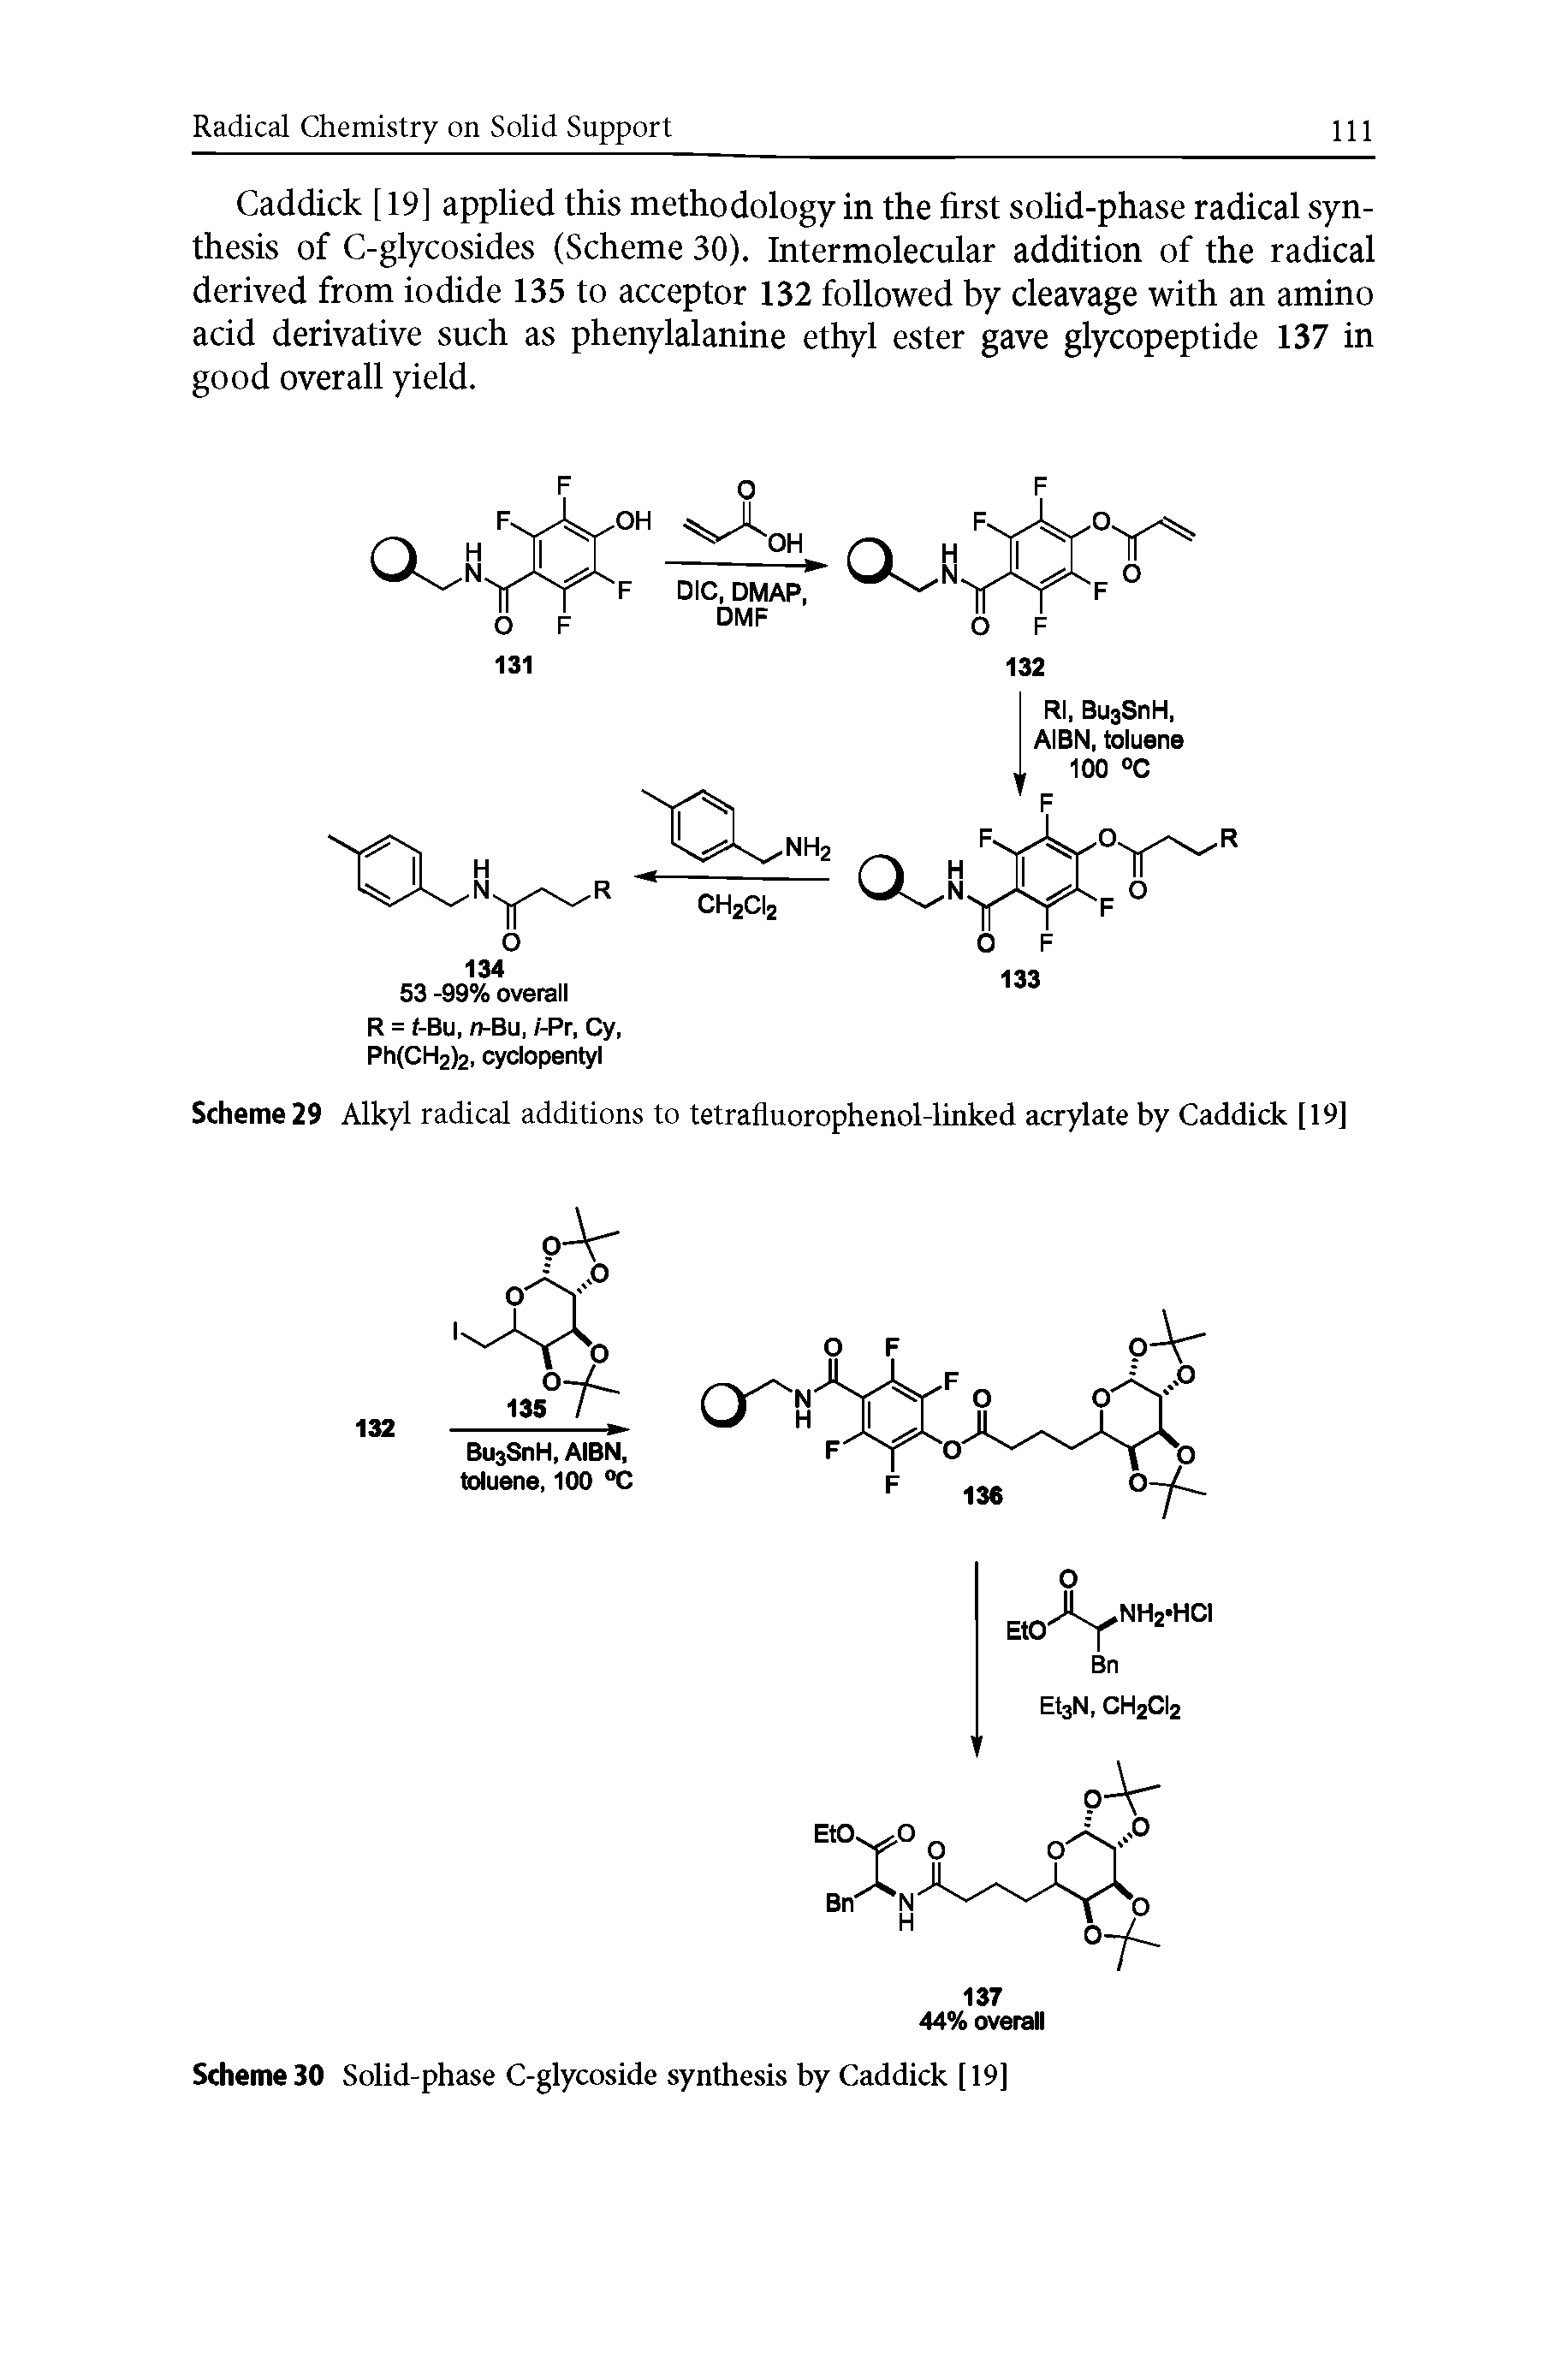 Scheme 29 Alkyl radical additions to tetrafluorophenol-linked acrylate by Caddick [19]...